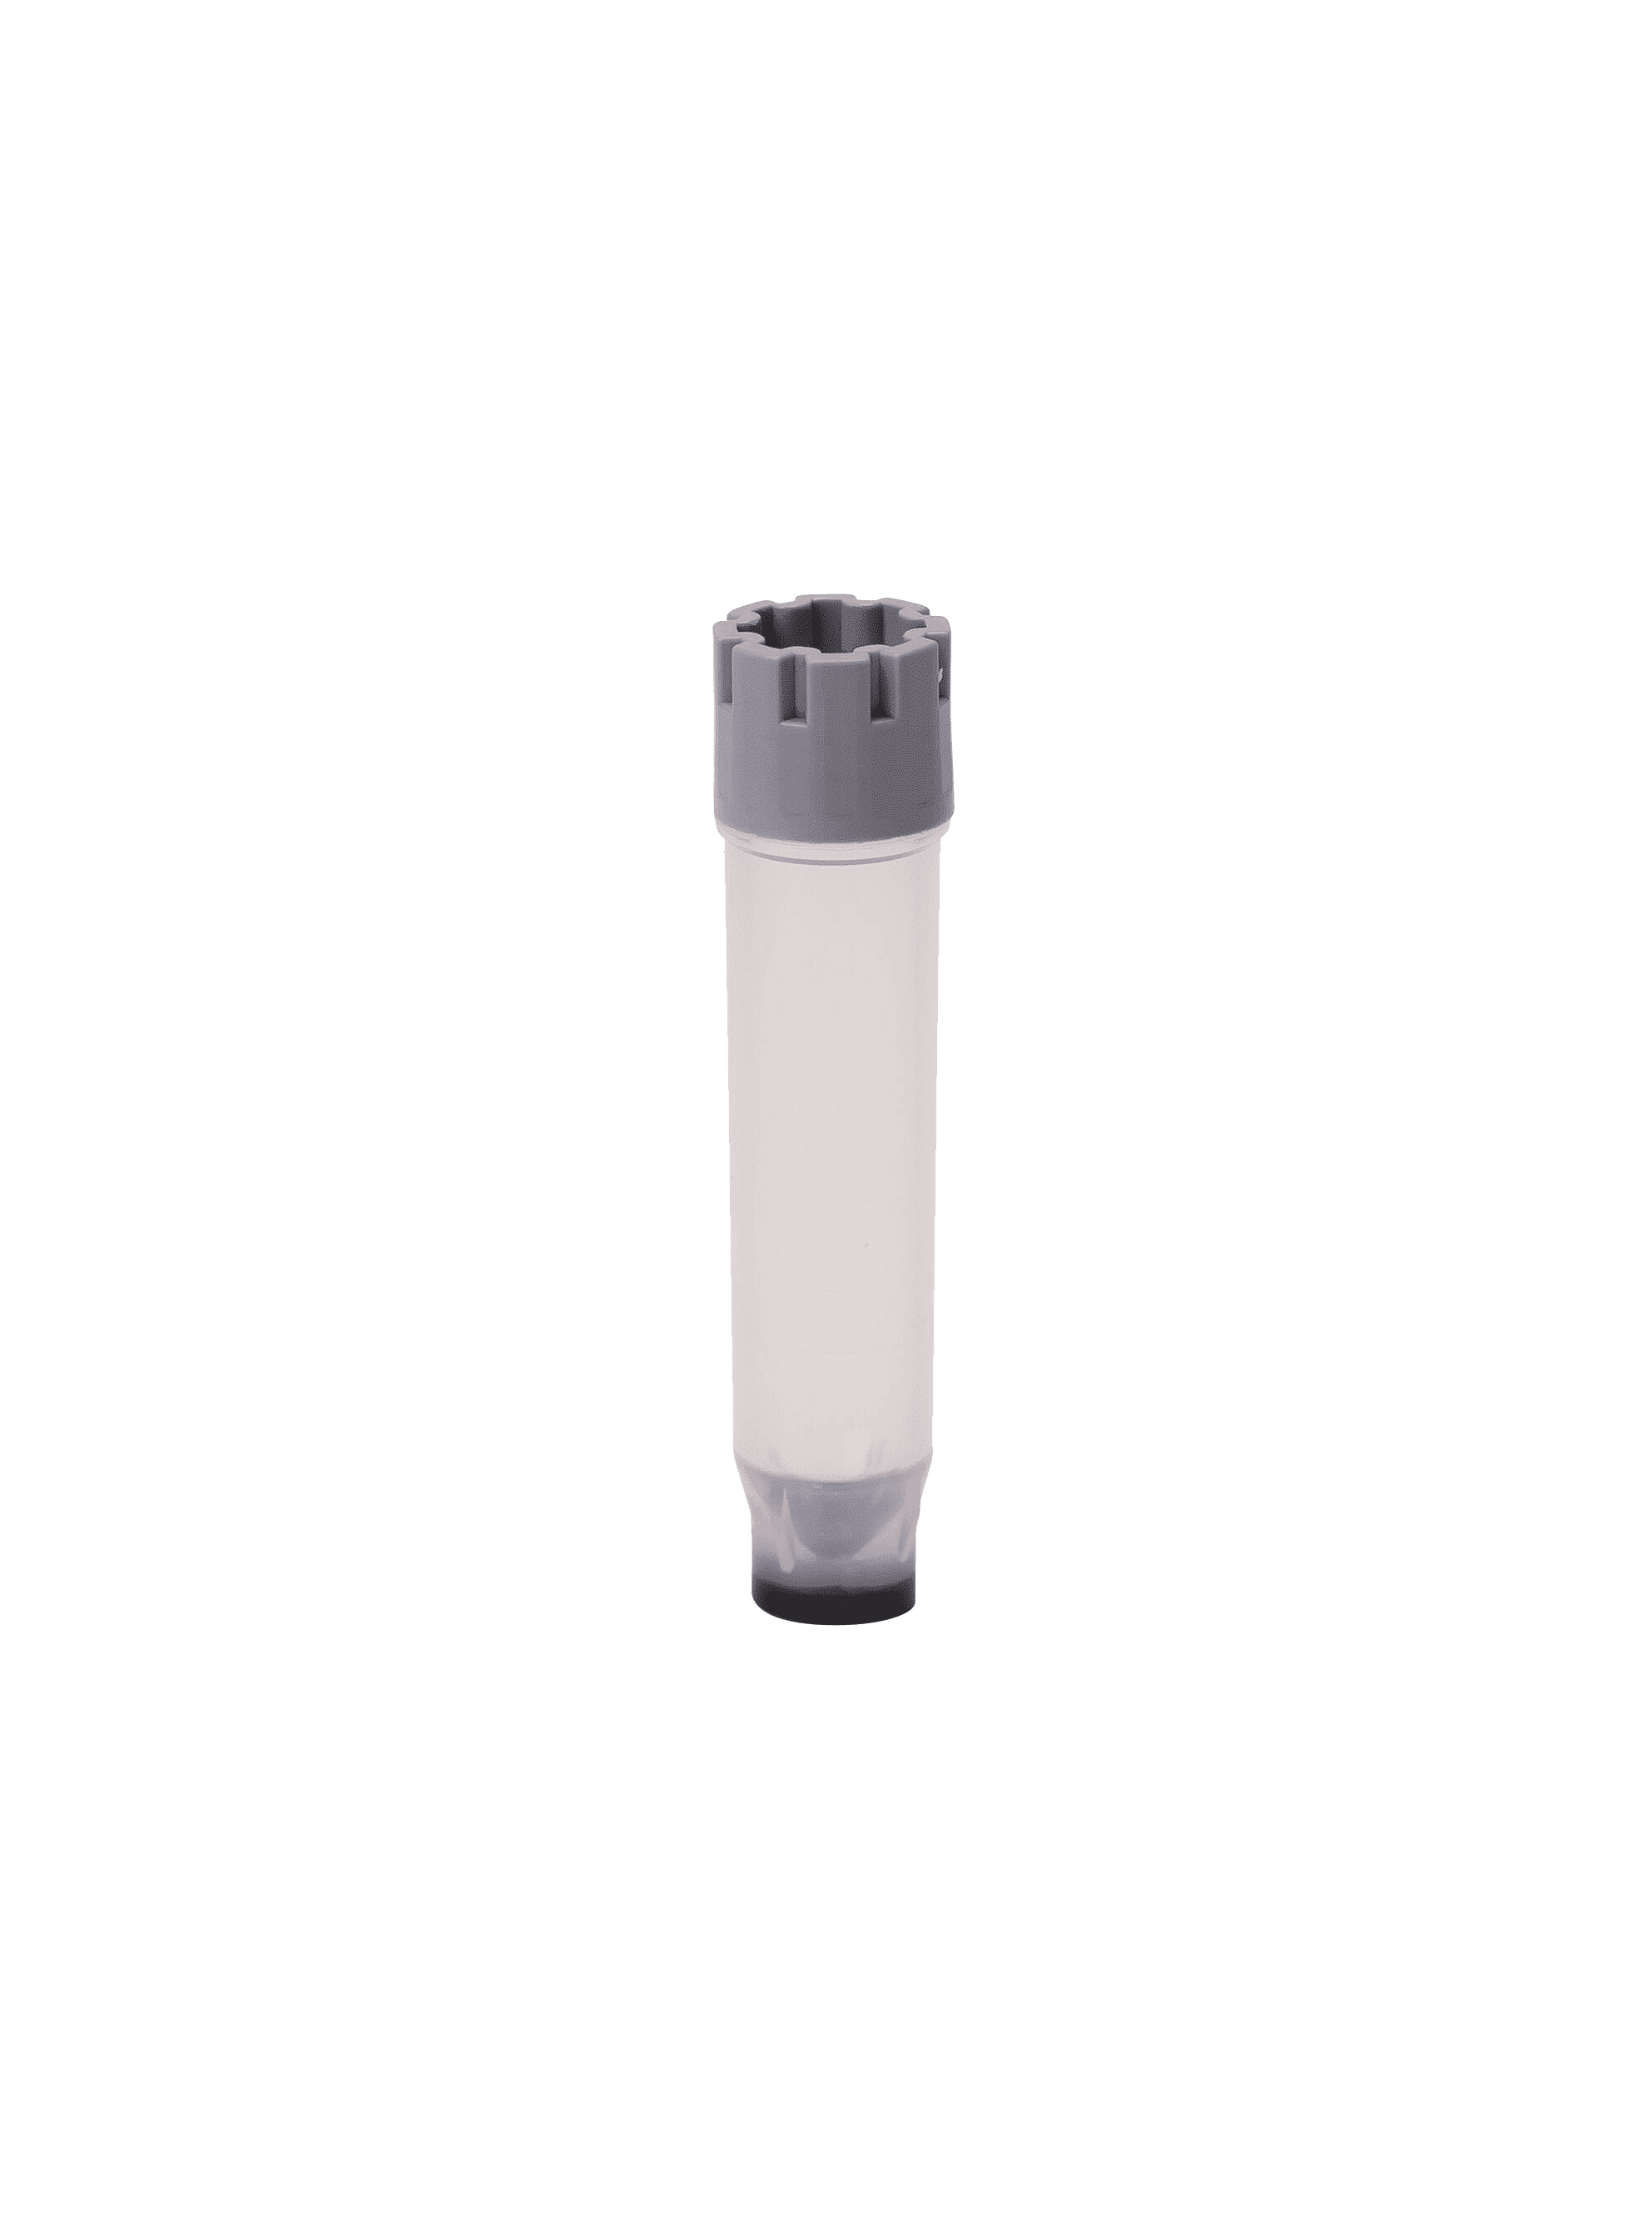 Individual external thread 0.80ml storage tube with grey screw cap